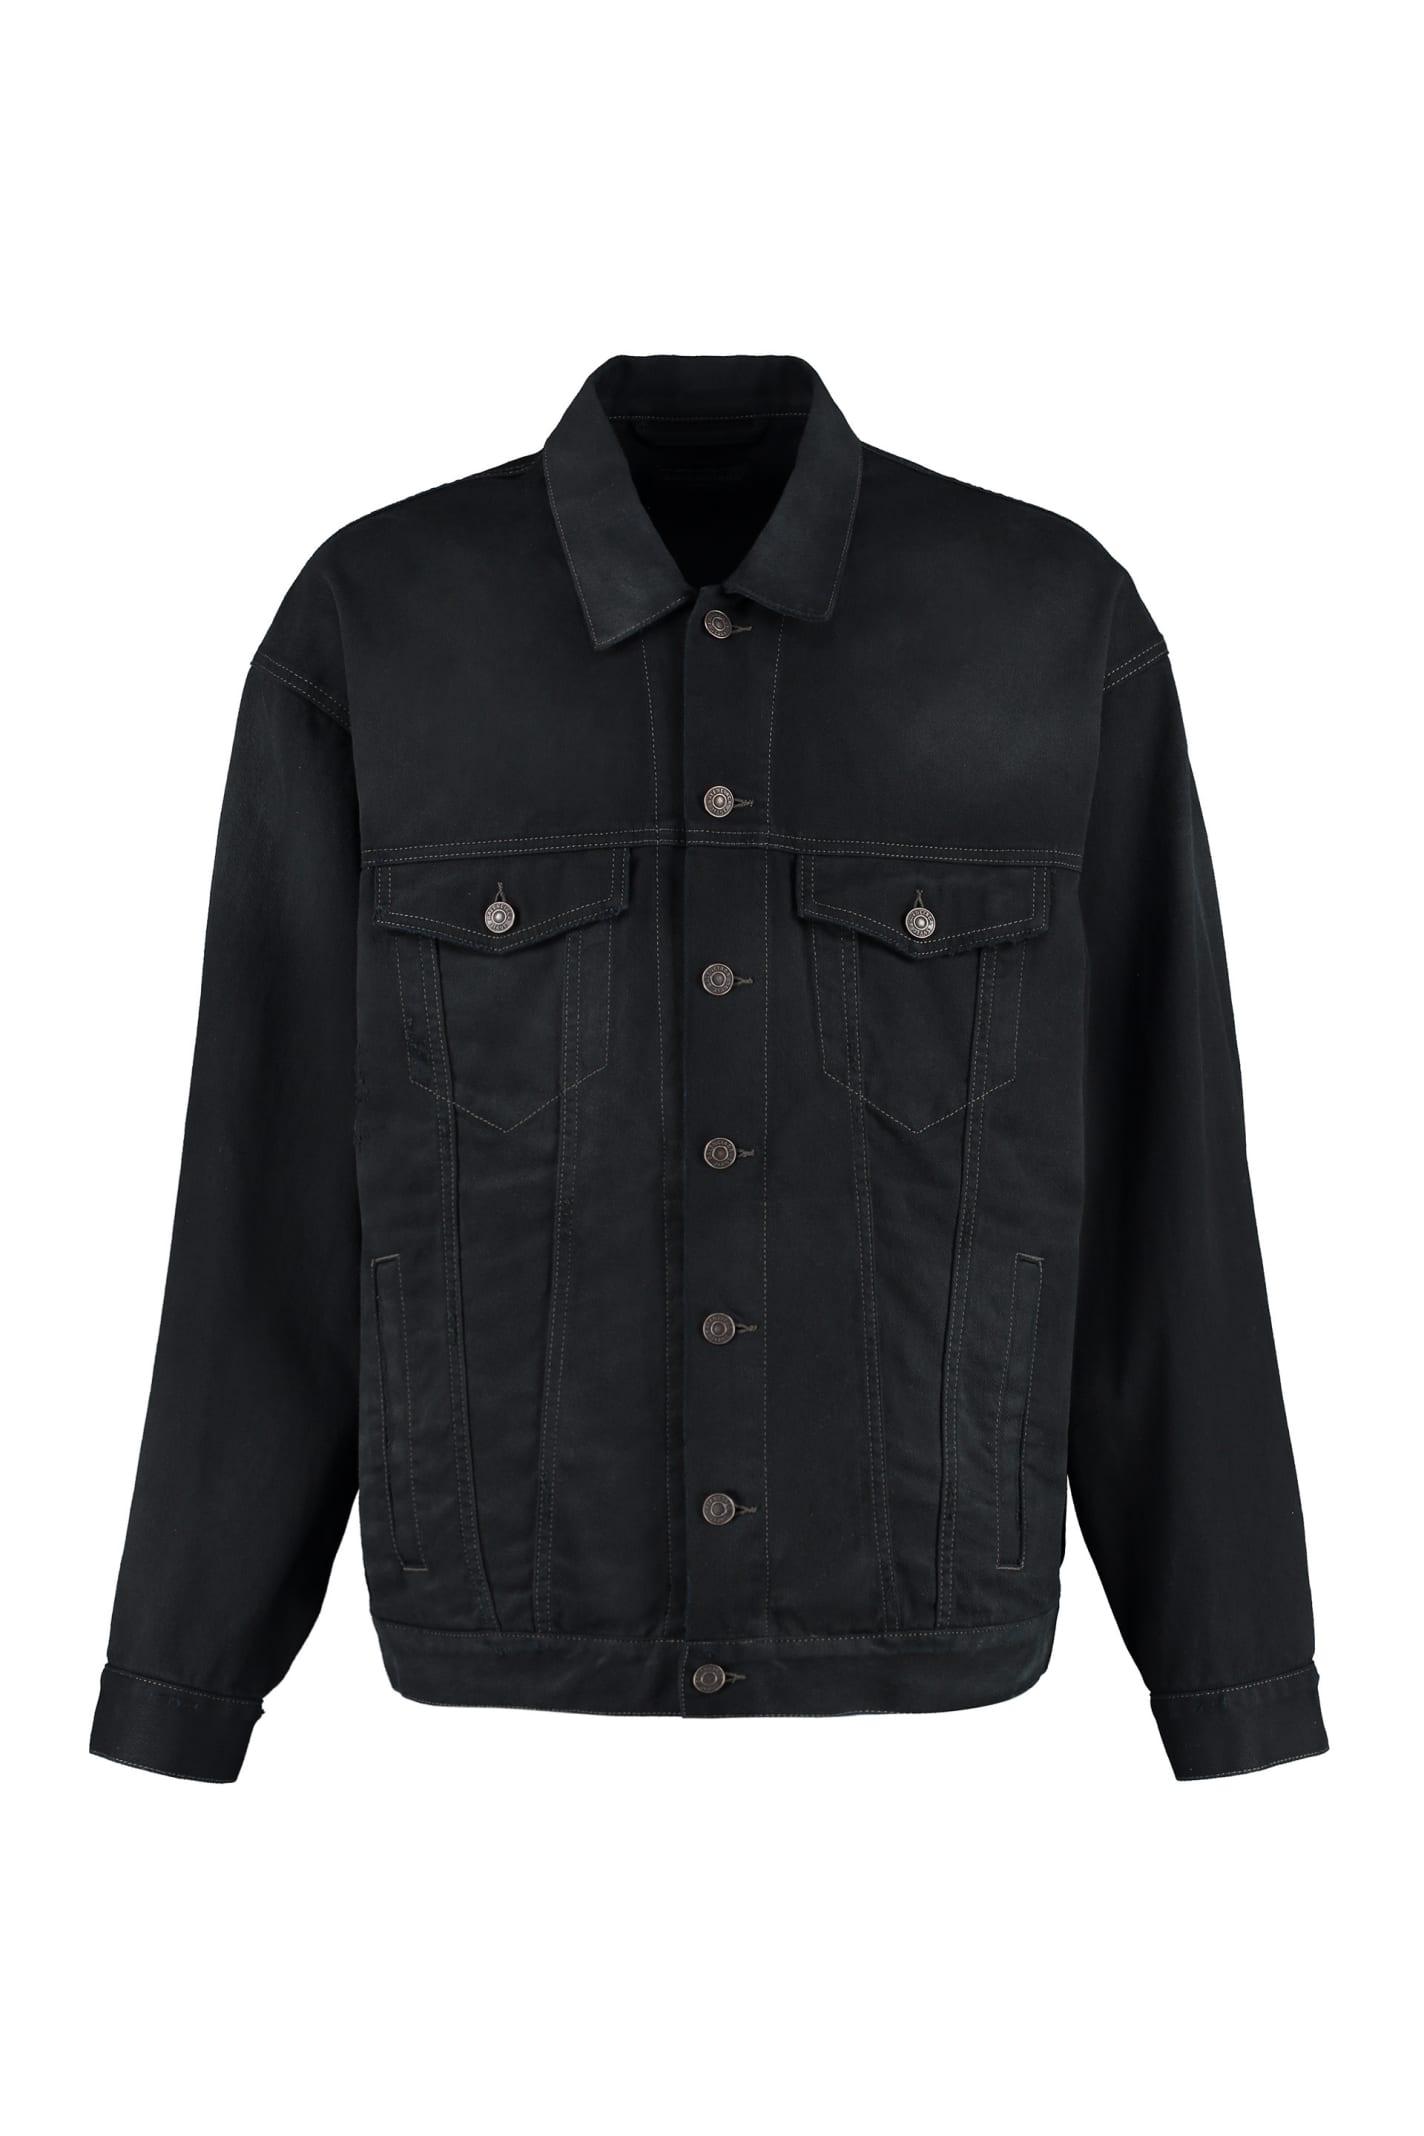 Balenciaga Denim Jacket in Black for Men | Lyst